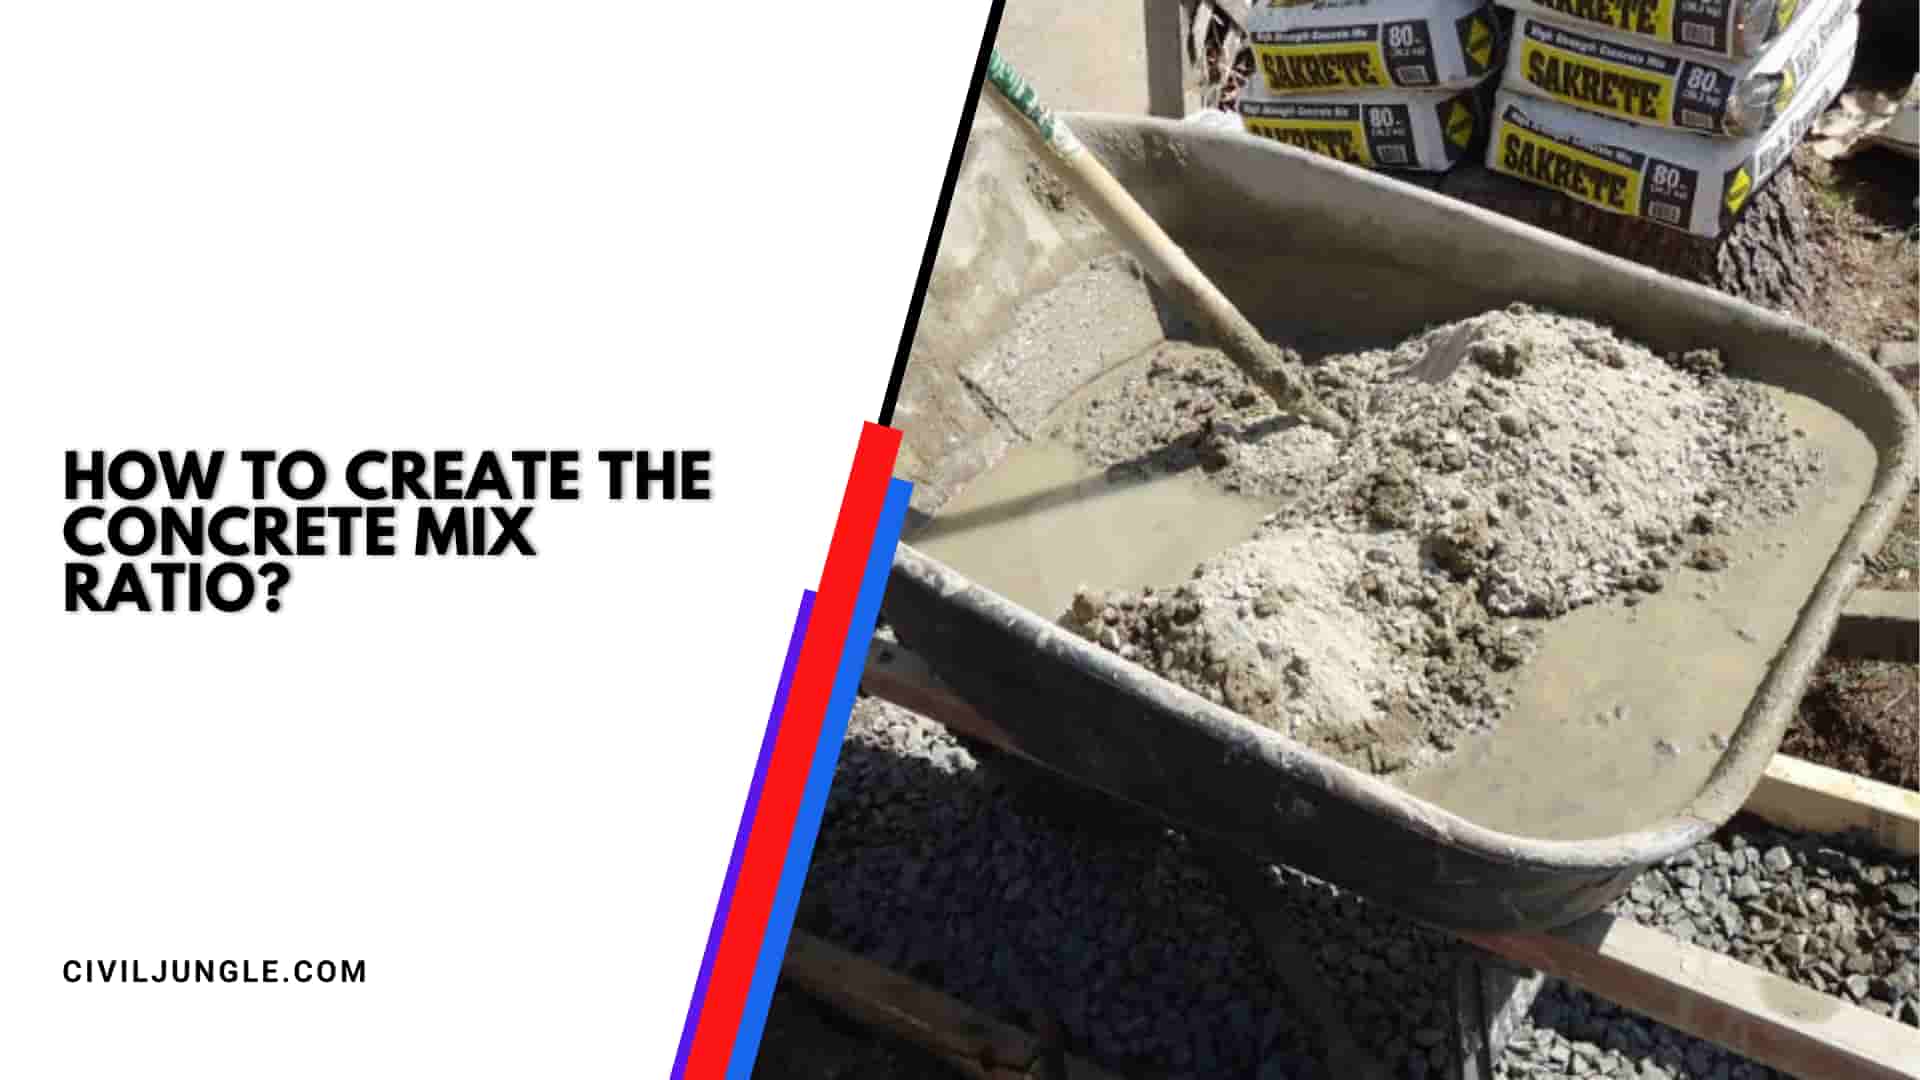 How To Create The Concrete Mix Ratio?